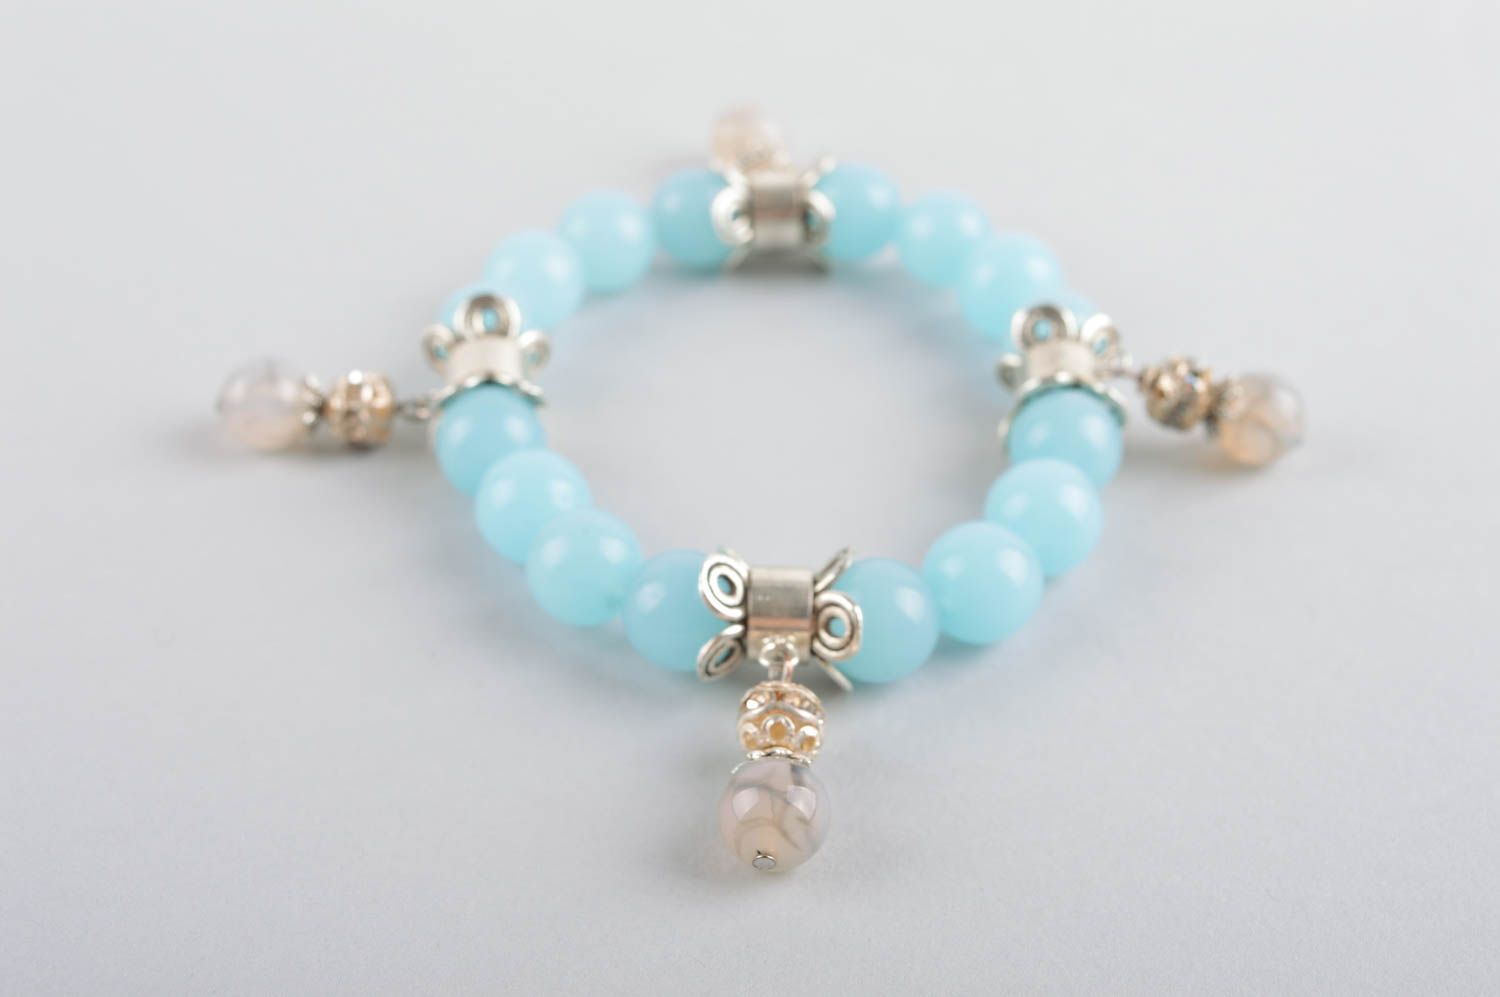 Handmade bracelet bead bracelet gemstone jewelry fashion accessories gift ideas photo 3